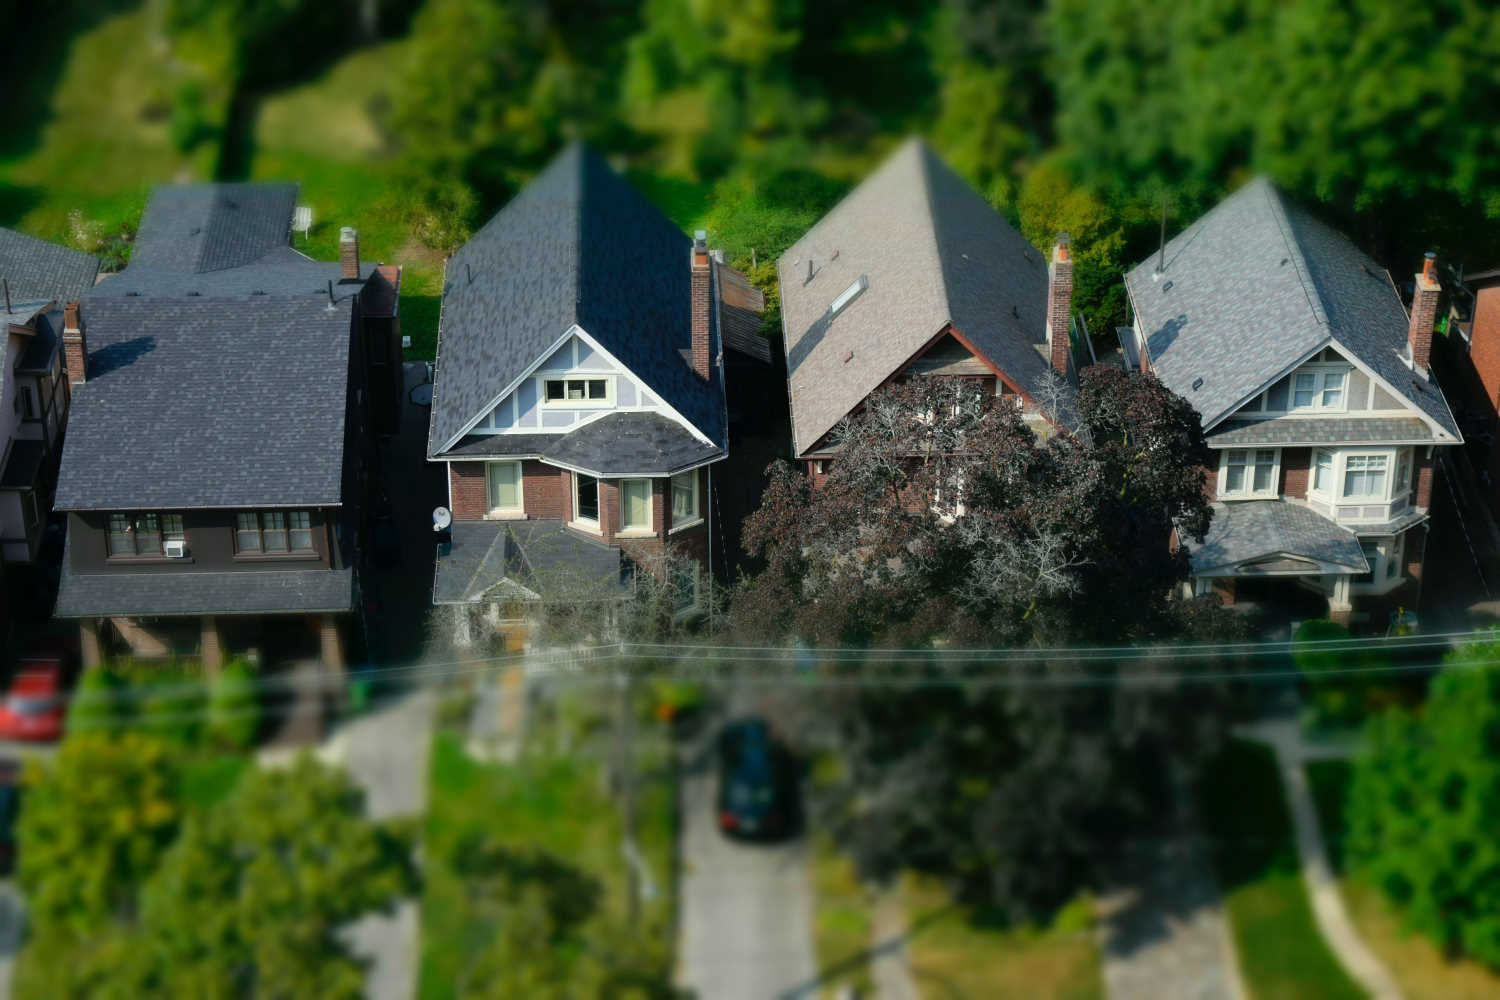 Birdseye view of 4 home roofs in Ottawa.